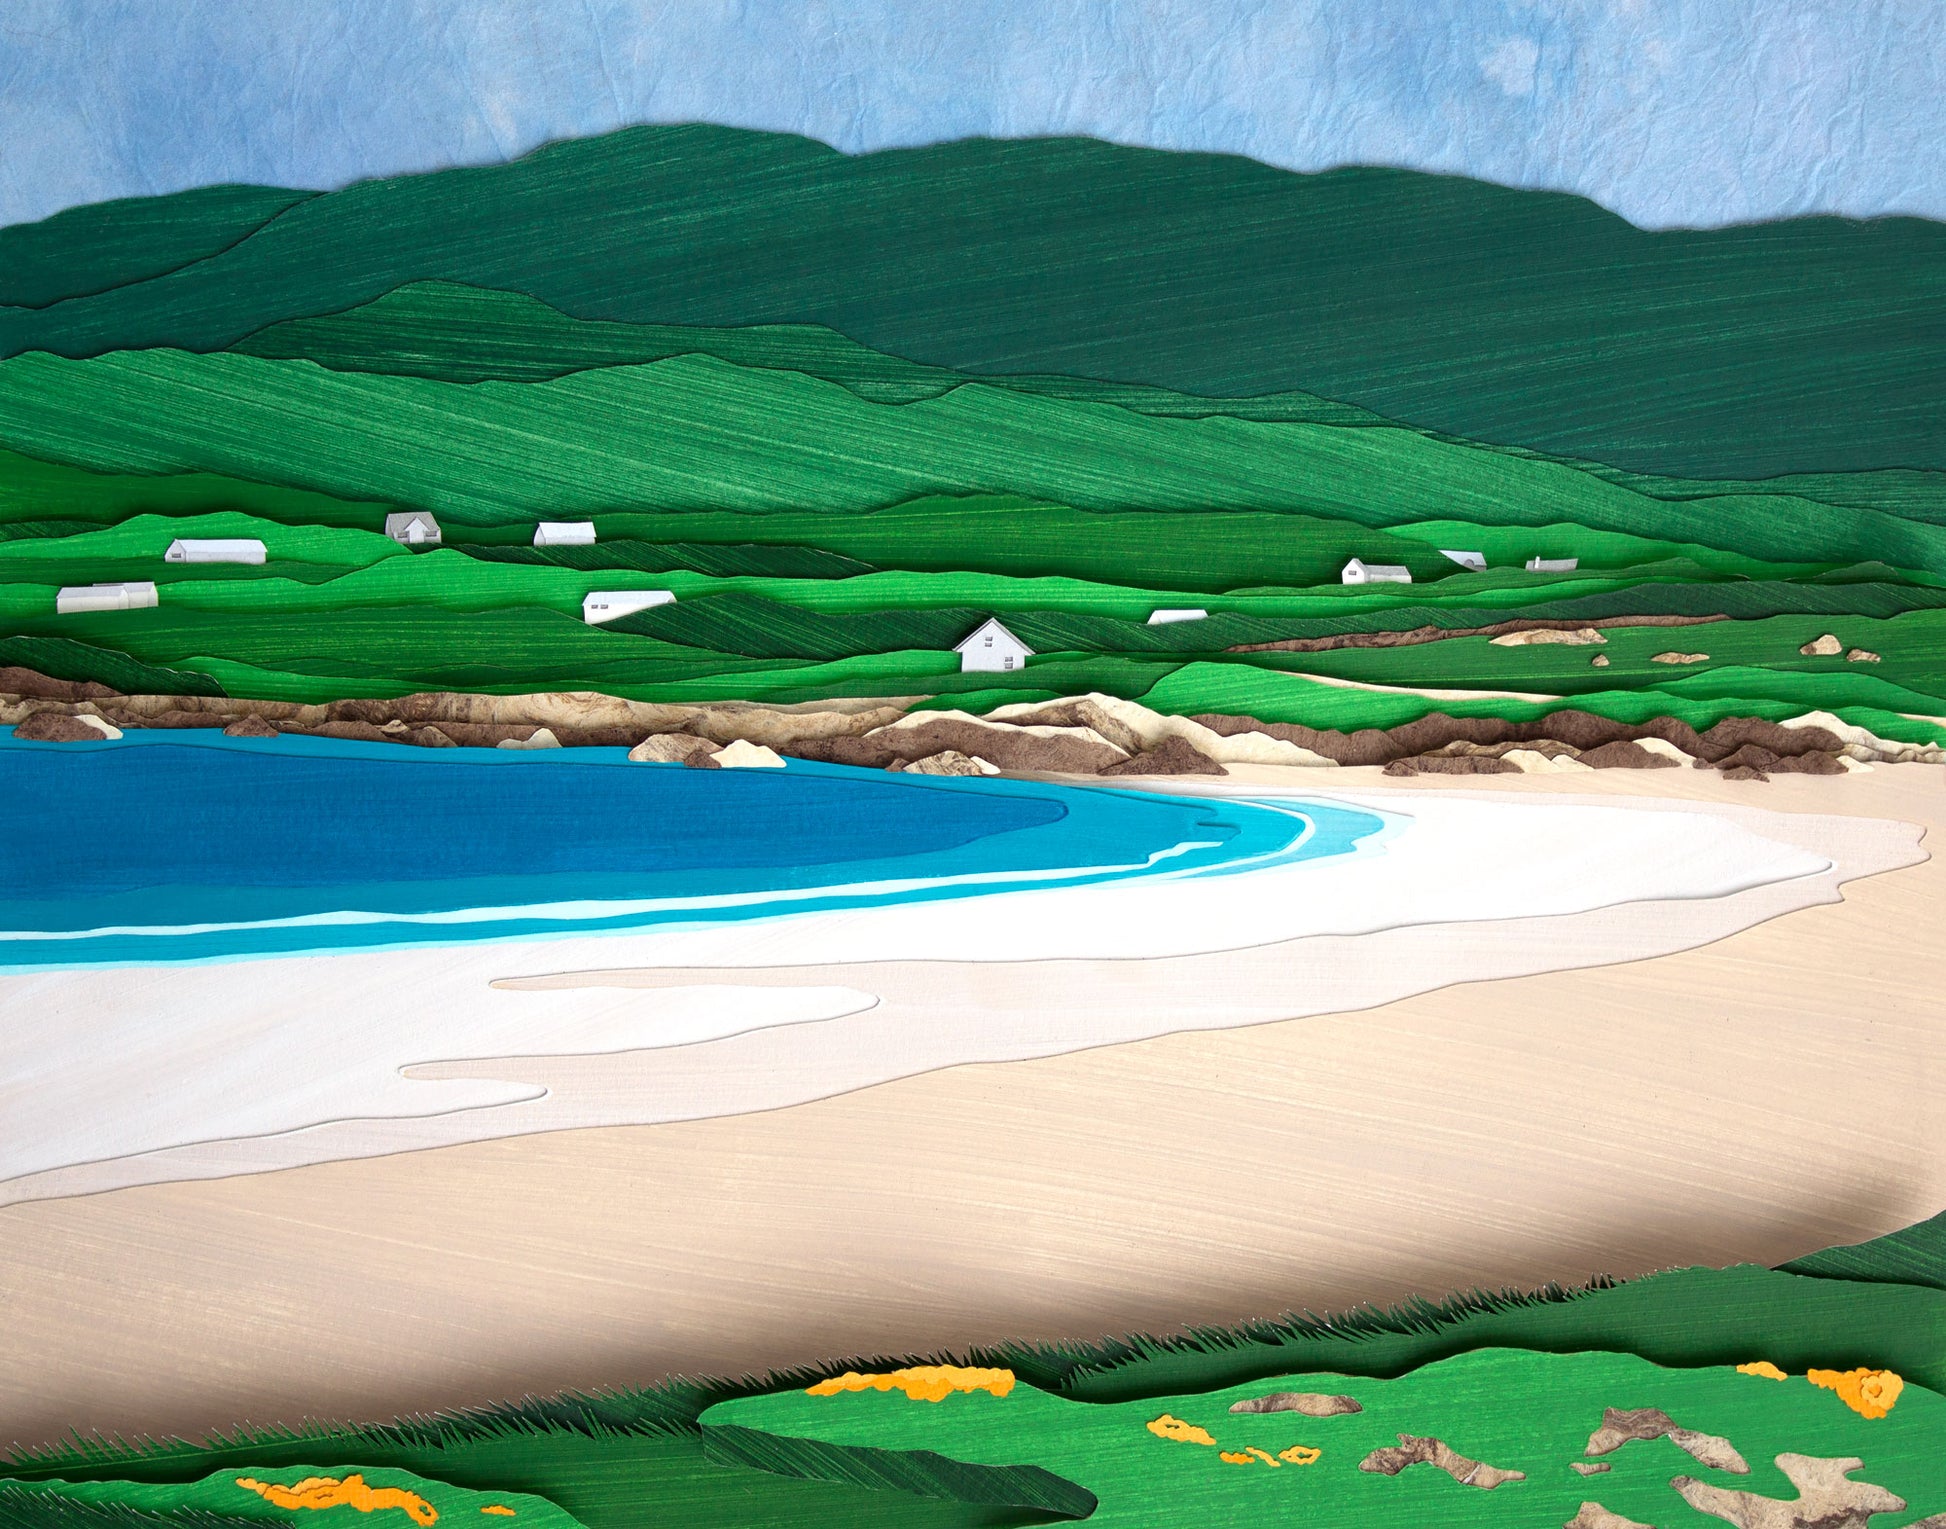 Archival print of cut paper illustration of Gurteen Beach at Dog's Bay, Ireland.  